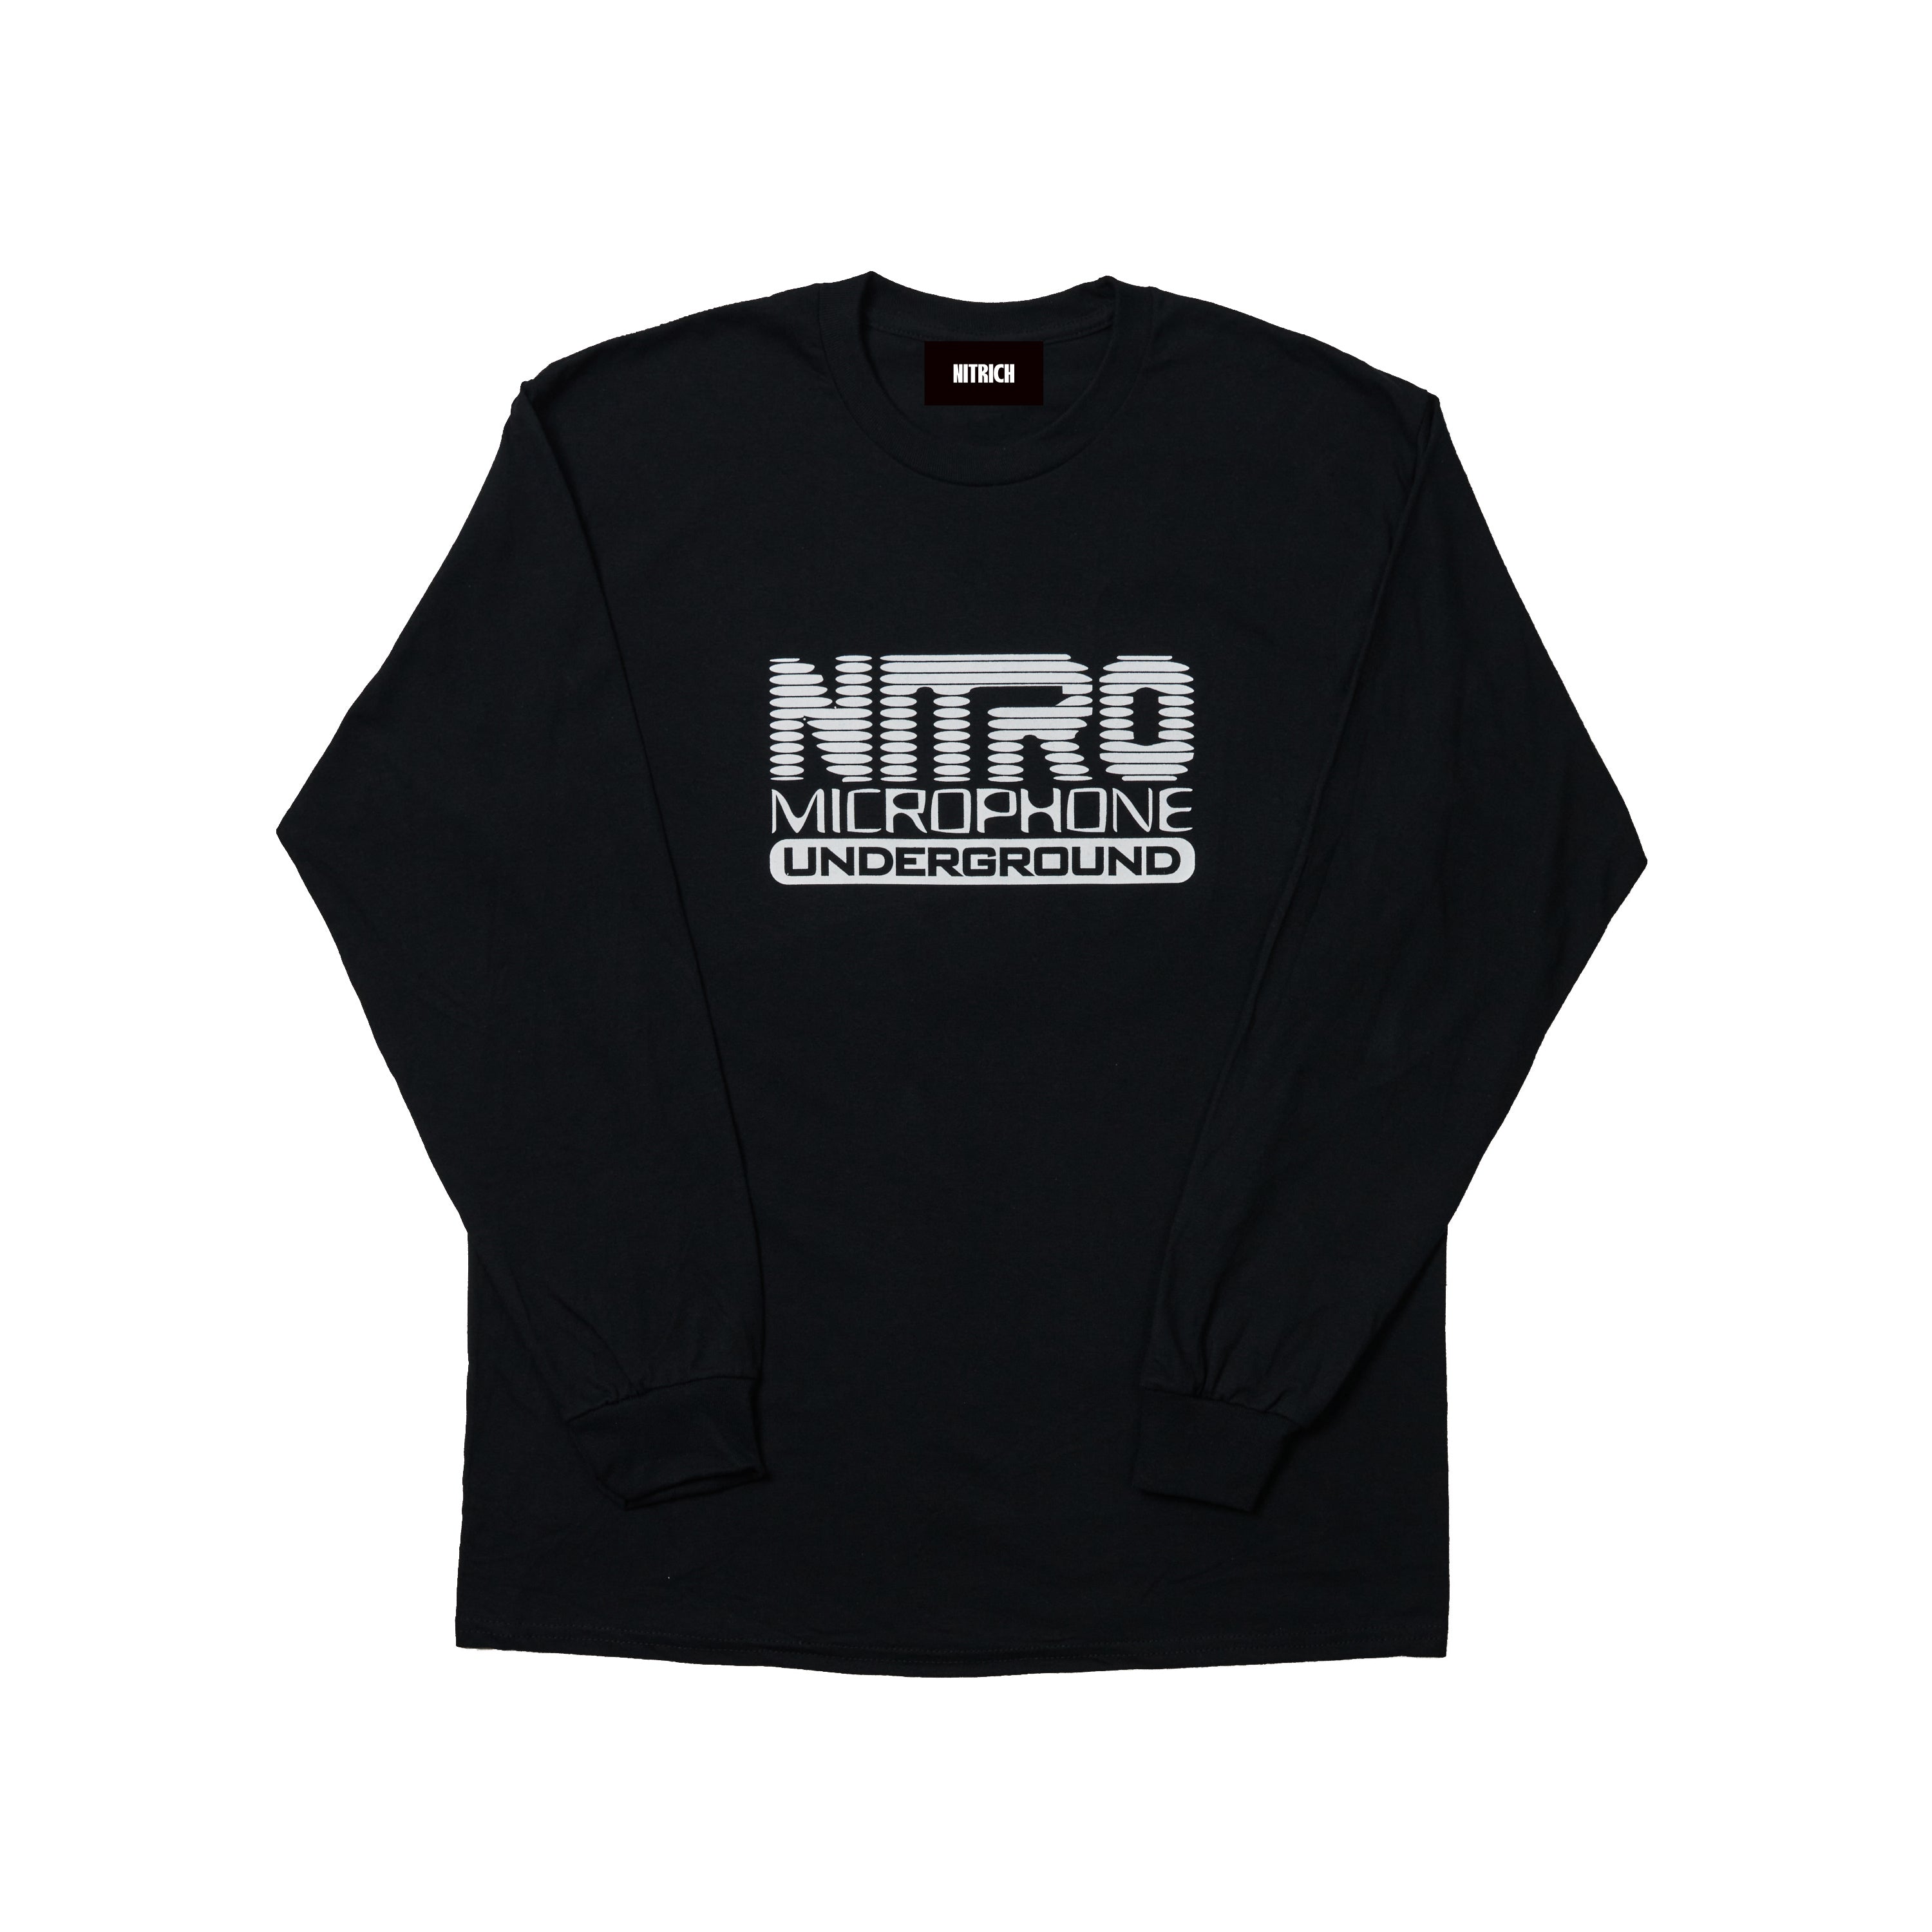 NITRO MICROPHONE UNDERGROUND Official Shop